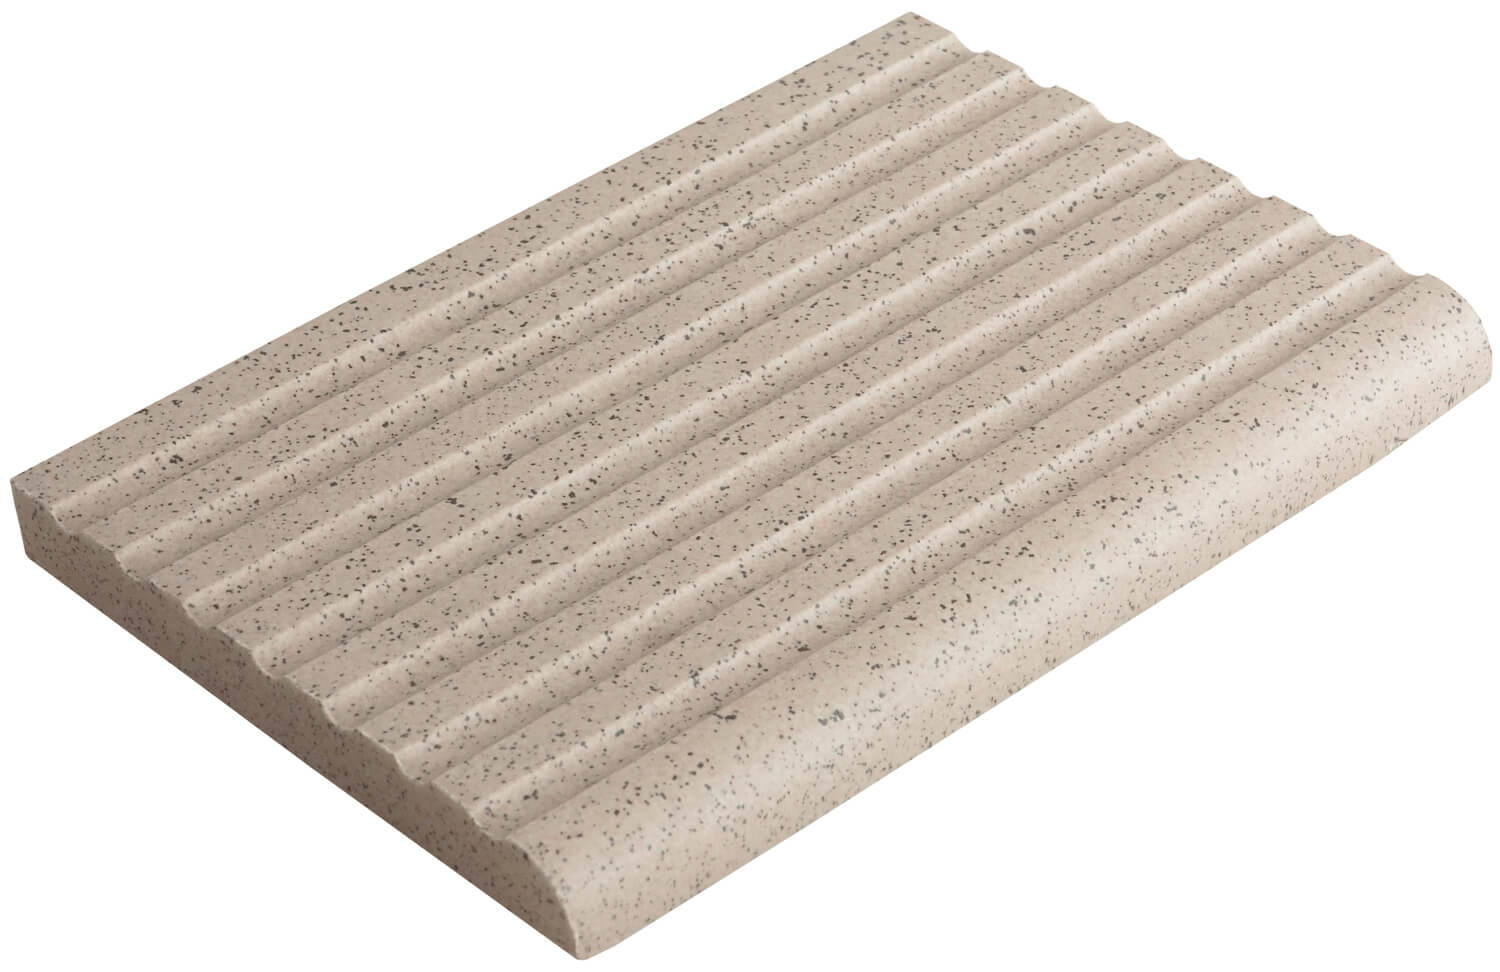 Dorset Woolliscroft Quartz Step Tread Slip Resistant Quarry Tile 148x100mm